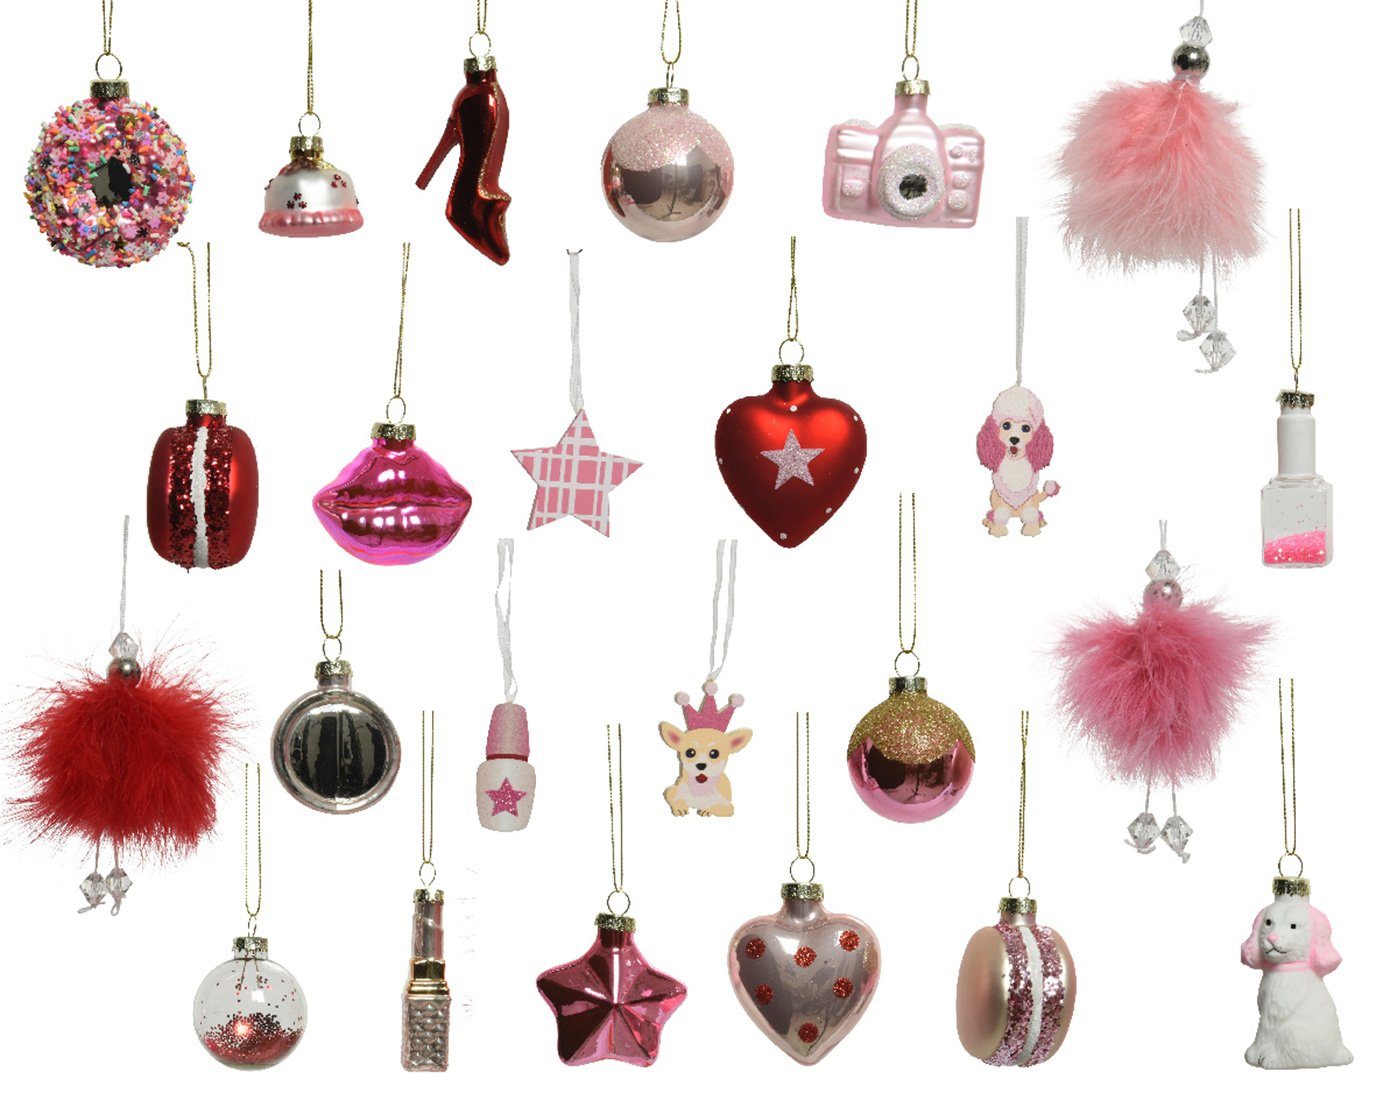 & season Adventskalender, pink Beauty Decoris Christbaumschmuck / decorations rot mit Fashion Adventskalender